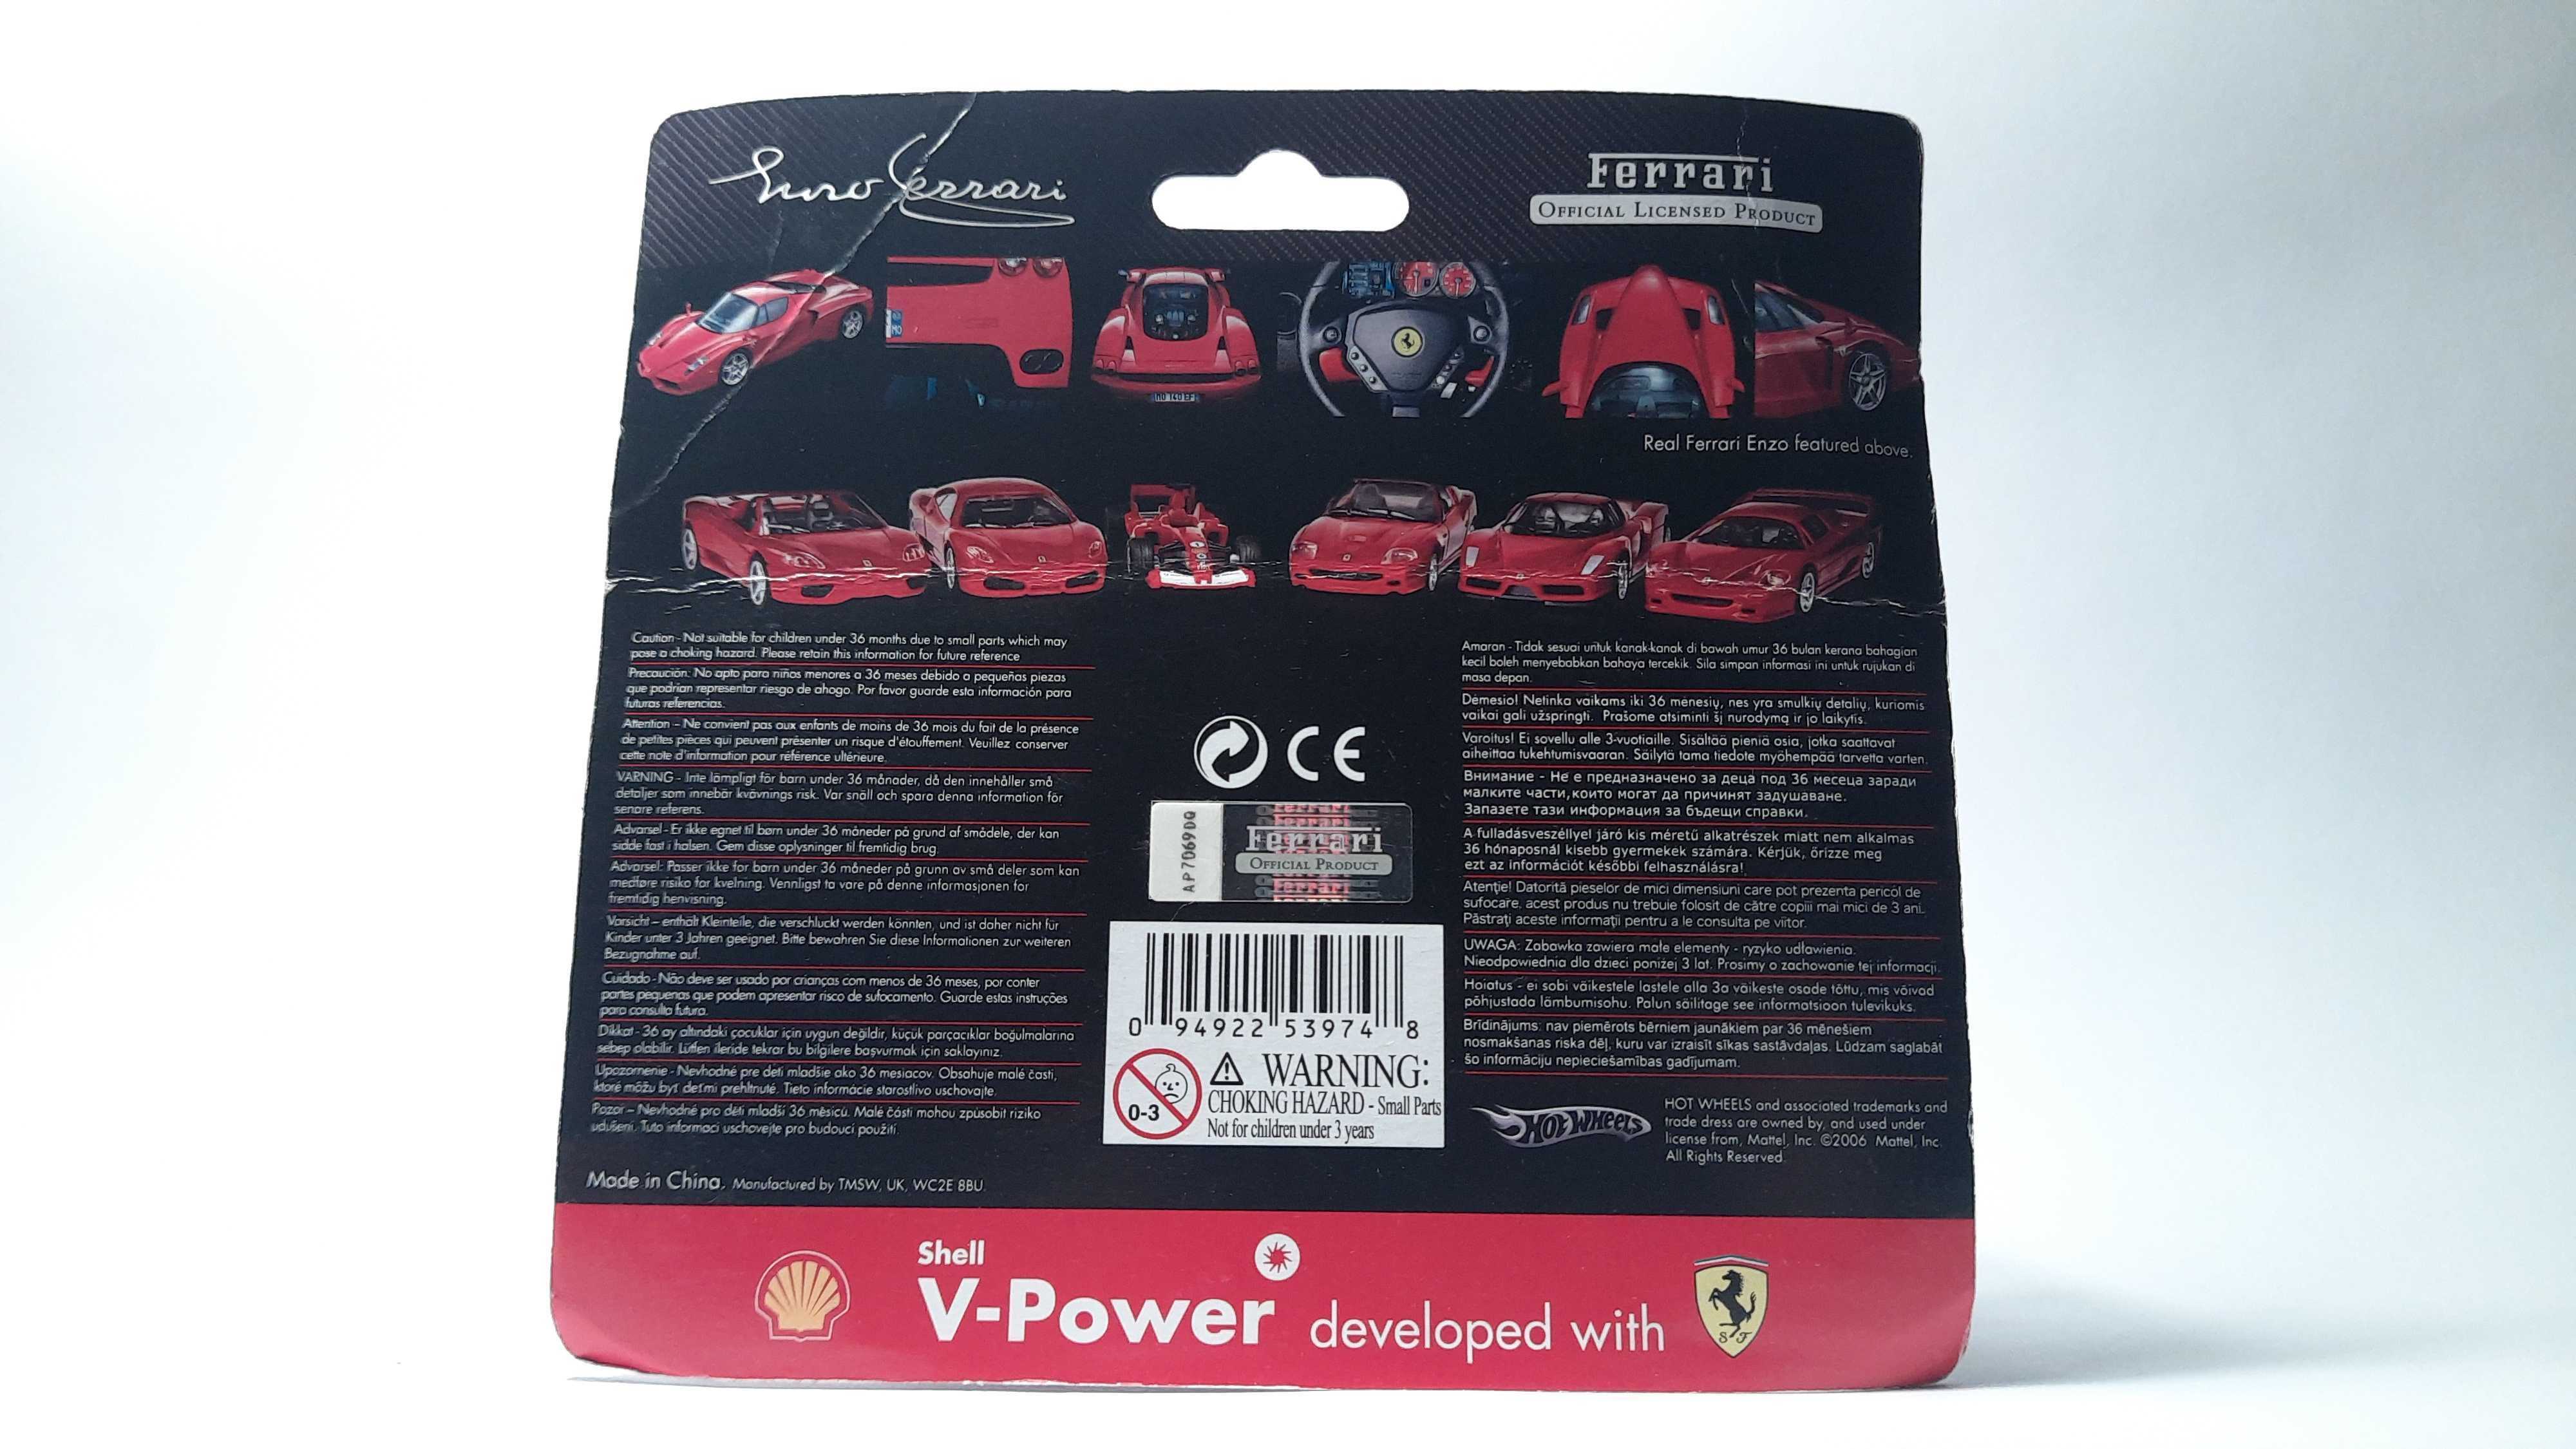 Hot Wheels Shell V-Power Ferrari Enzo Ferrari 1:38